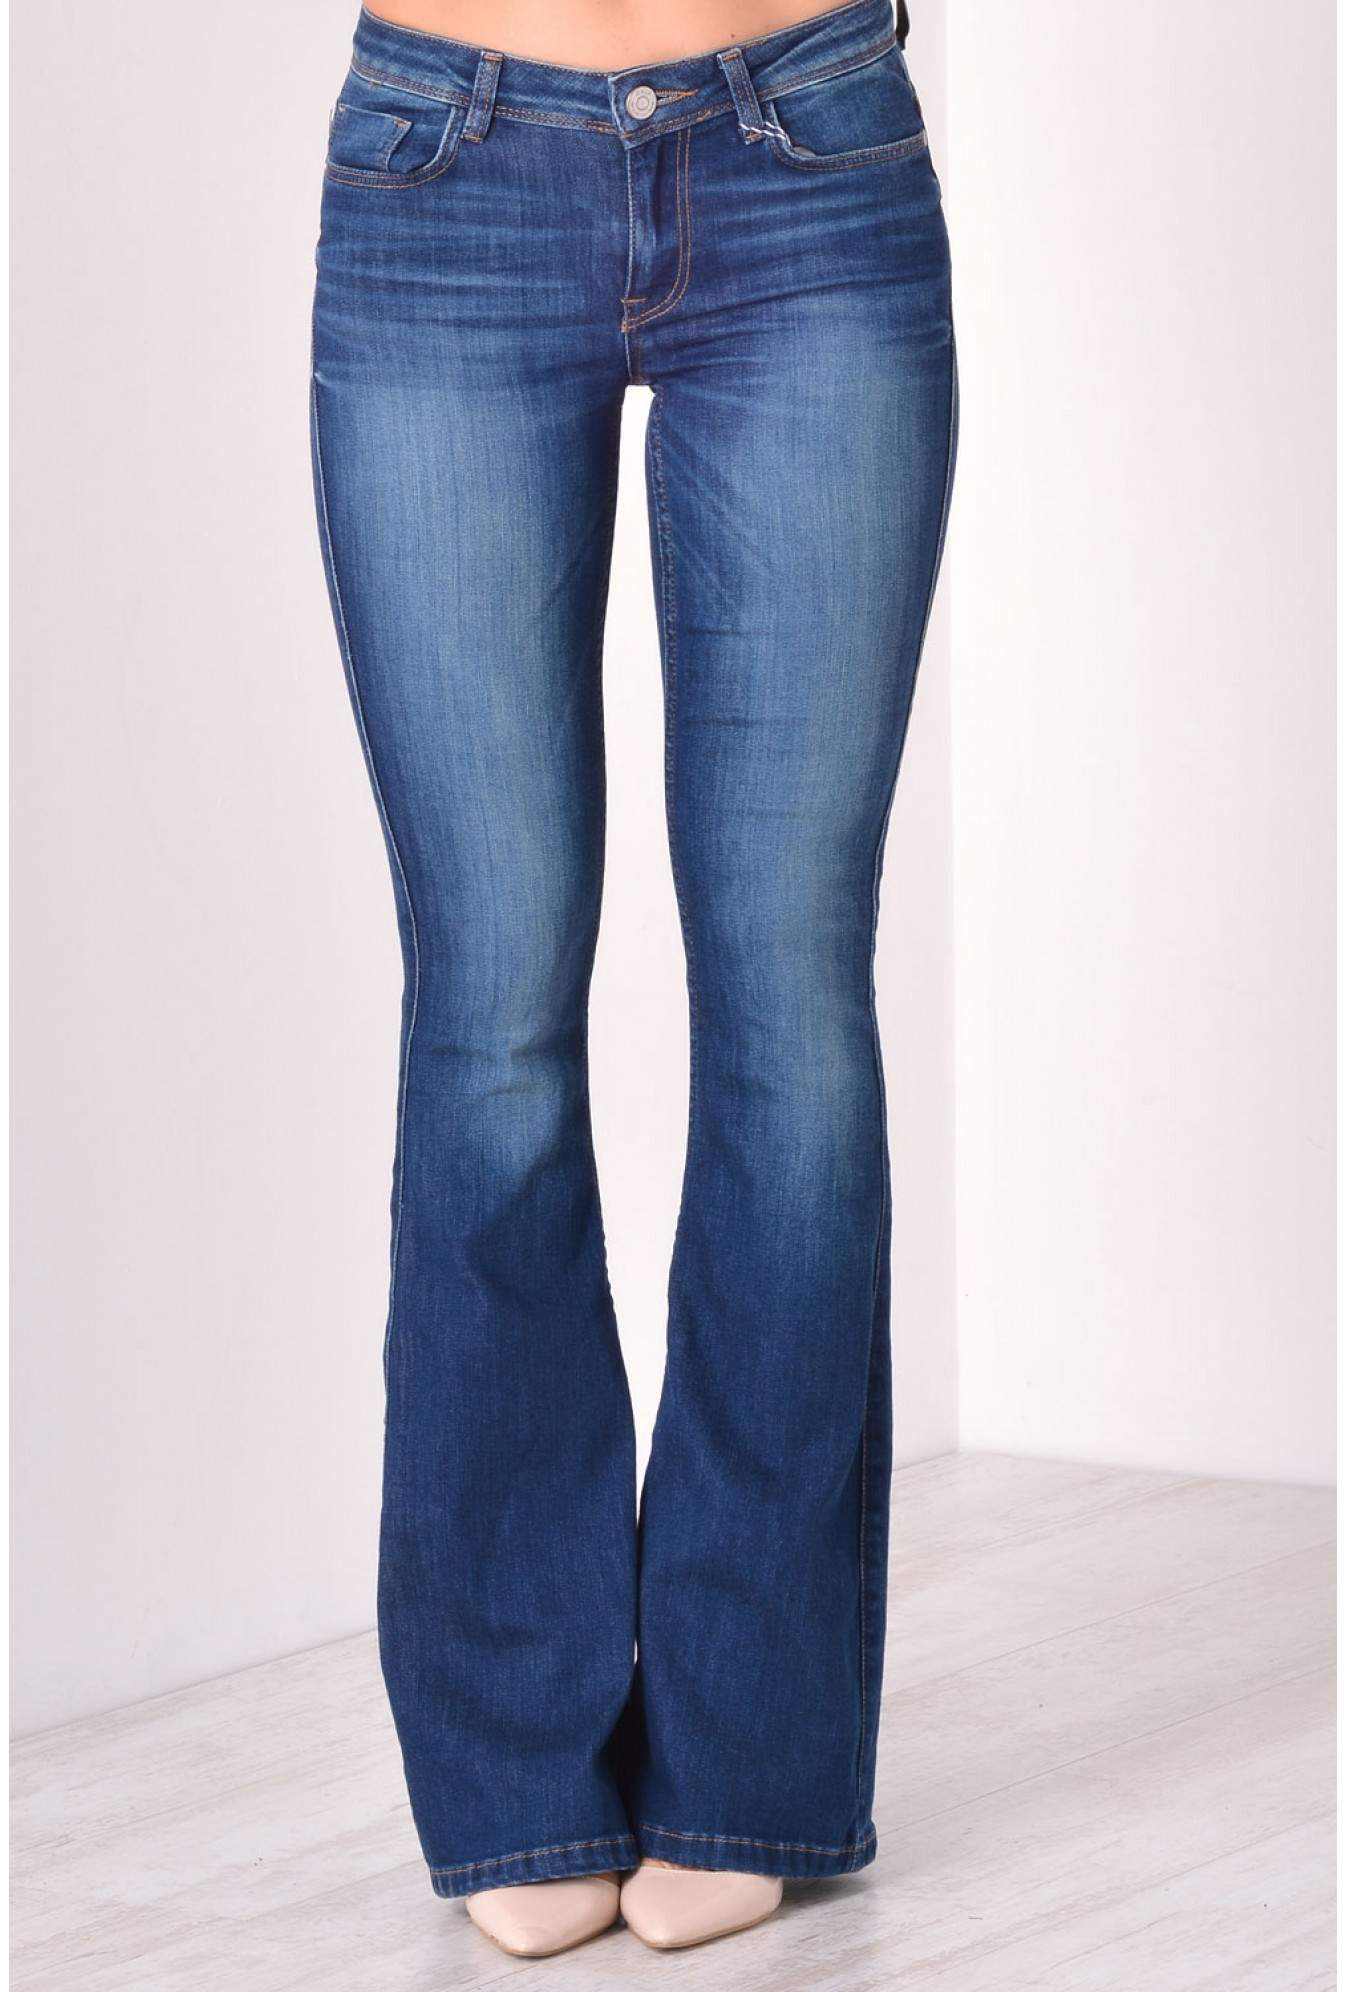 flare jeans short length